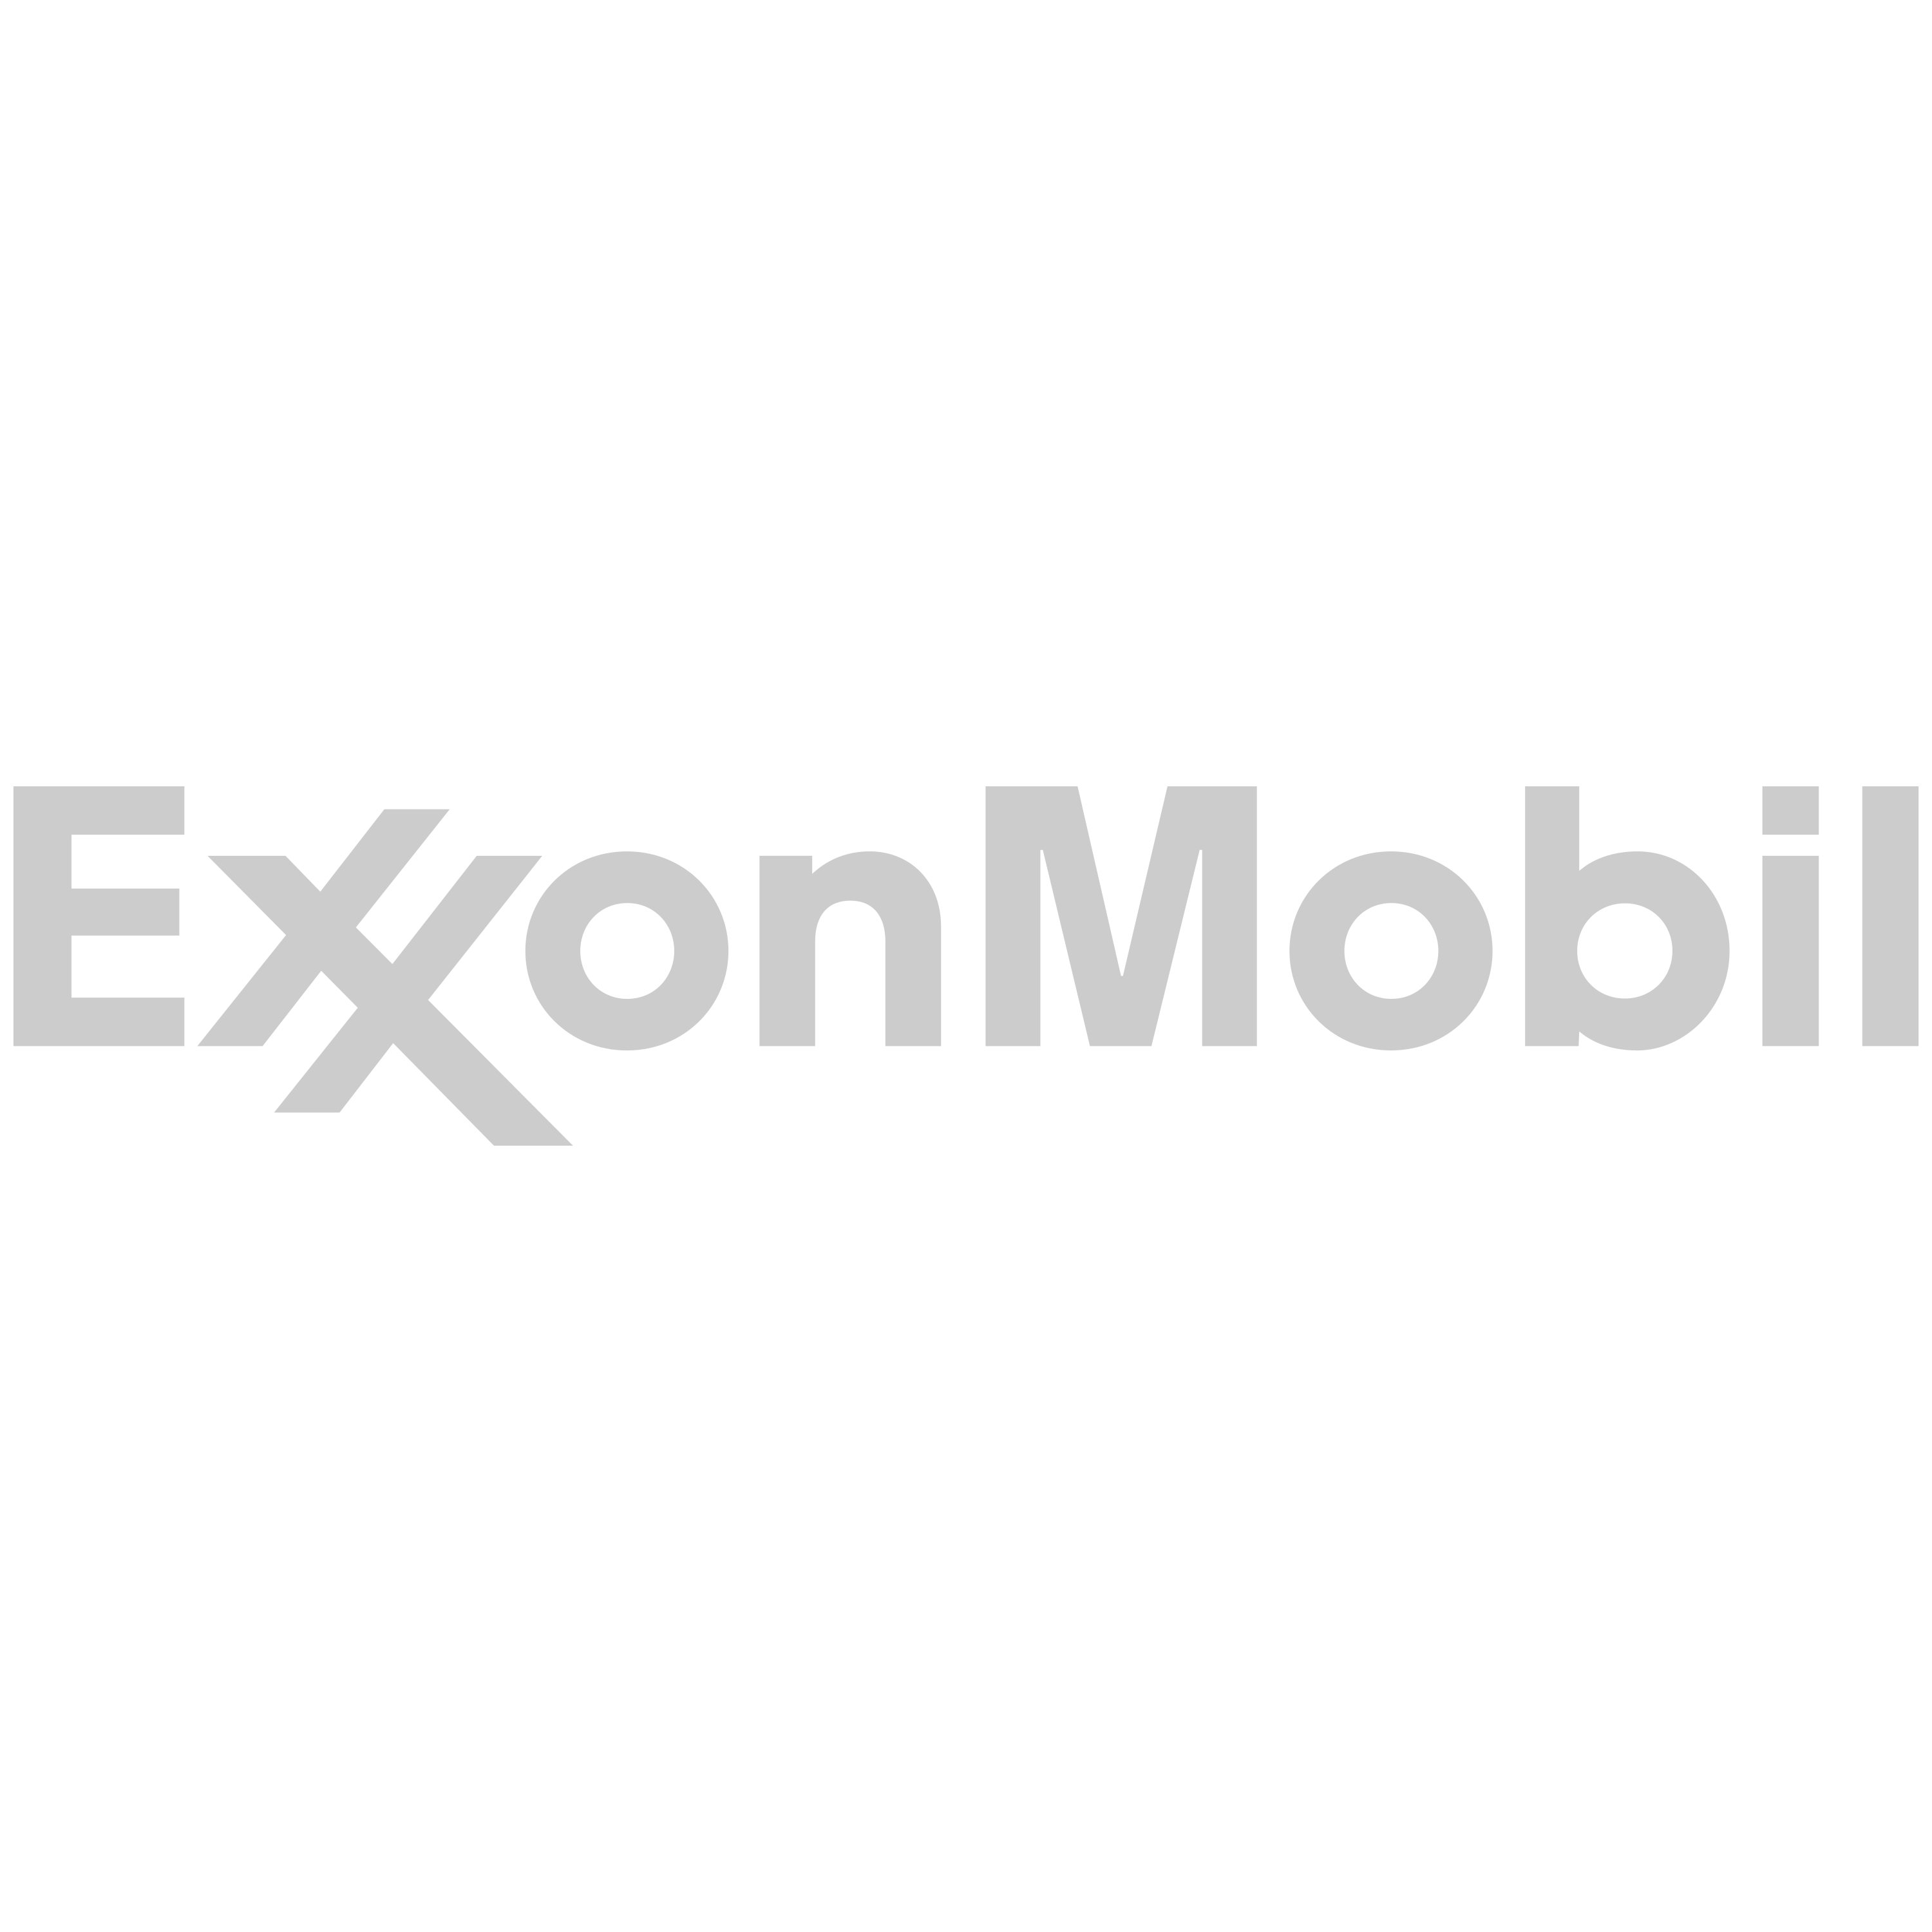 Exxonmobil Logo Transparent Picture